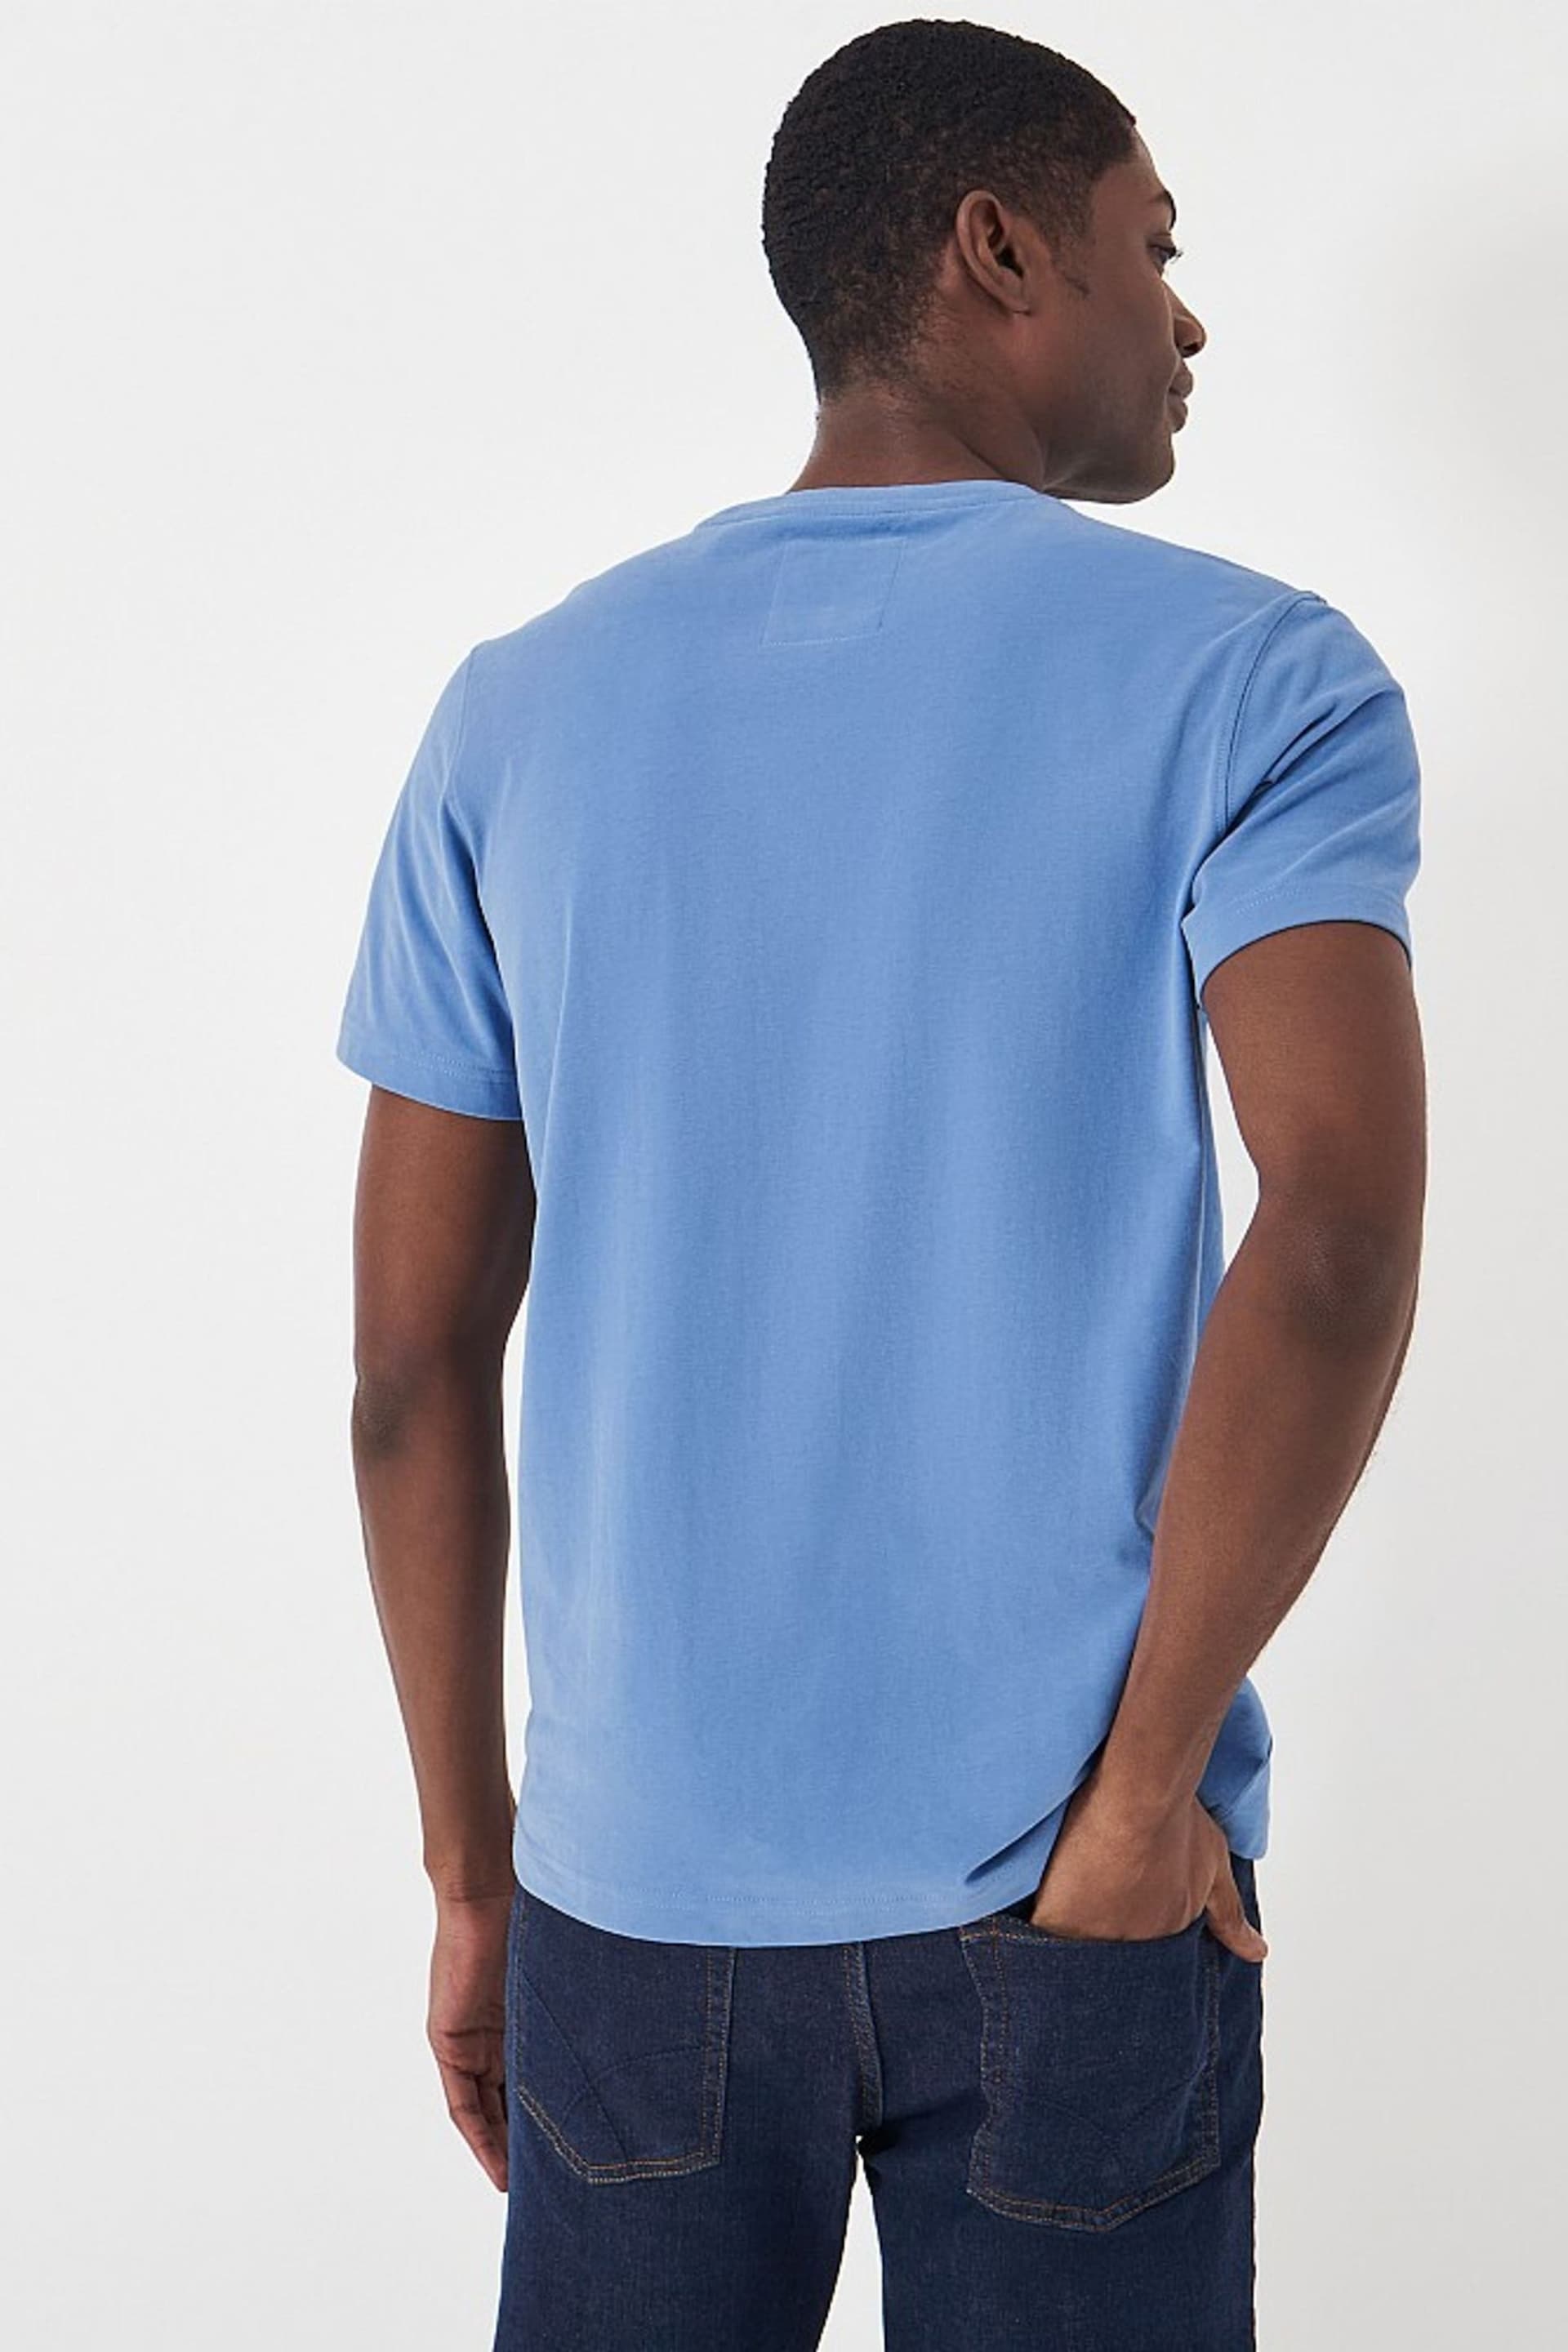 Crew Clothing Plain Cotton Classic T-Shirt - Image 2 of 4